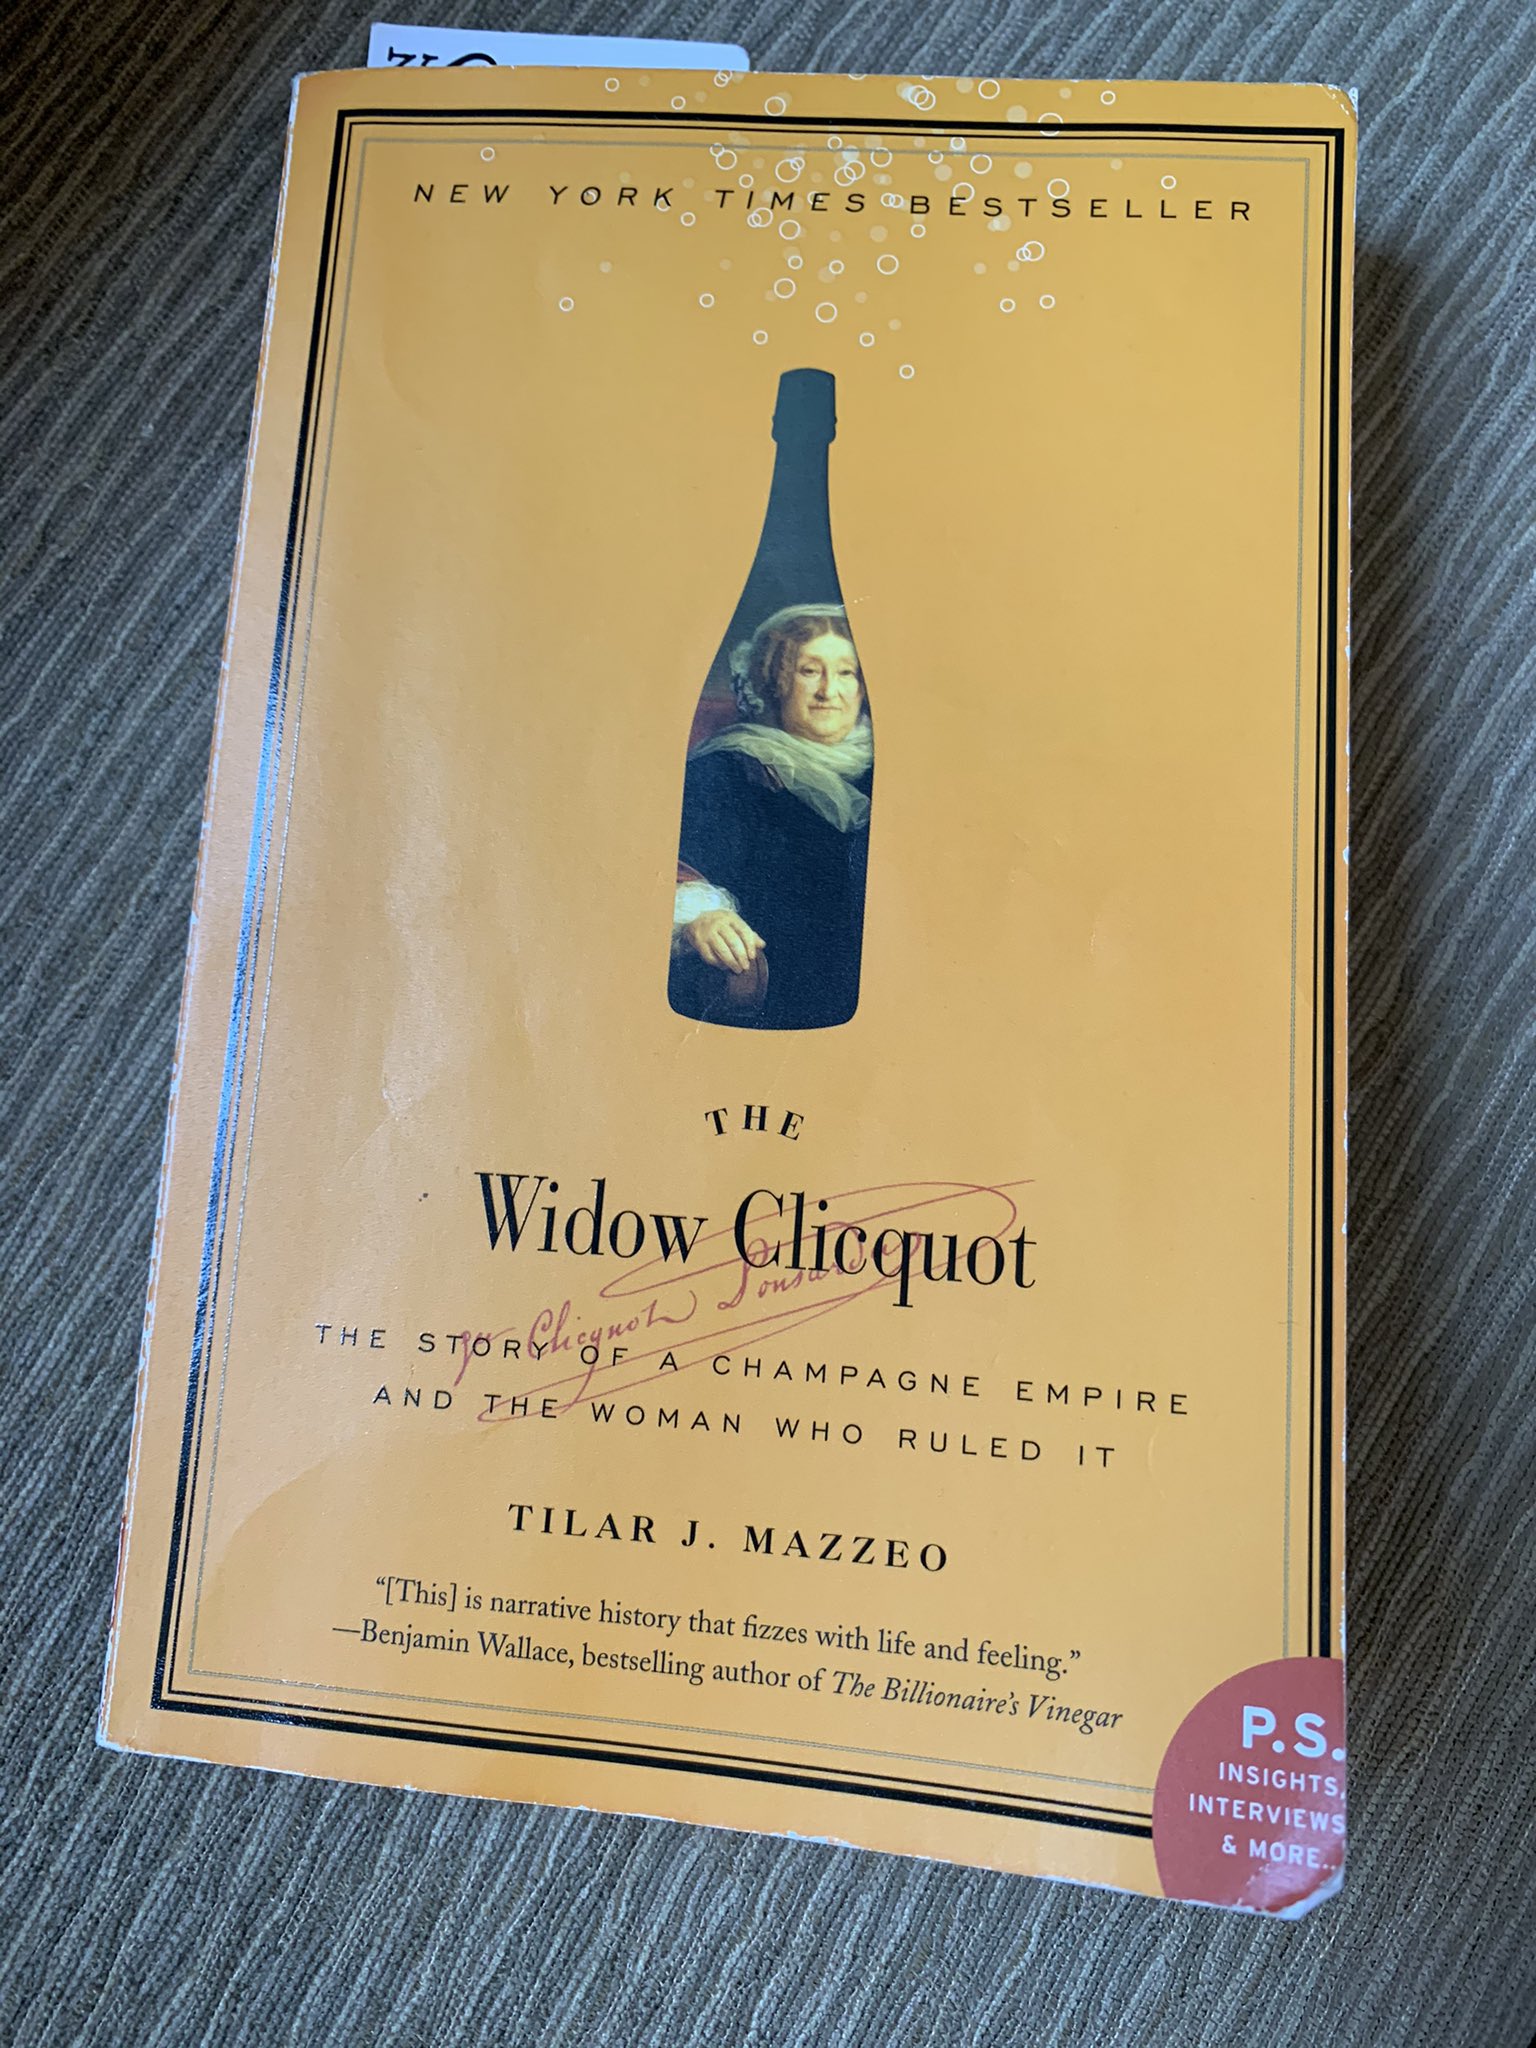 Veuve Clicquot [Book]